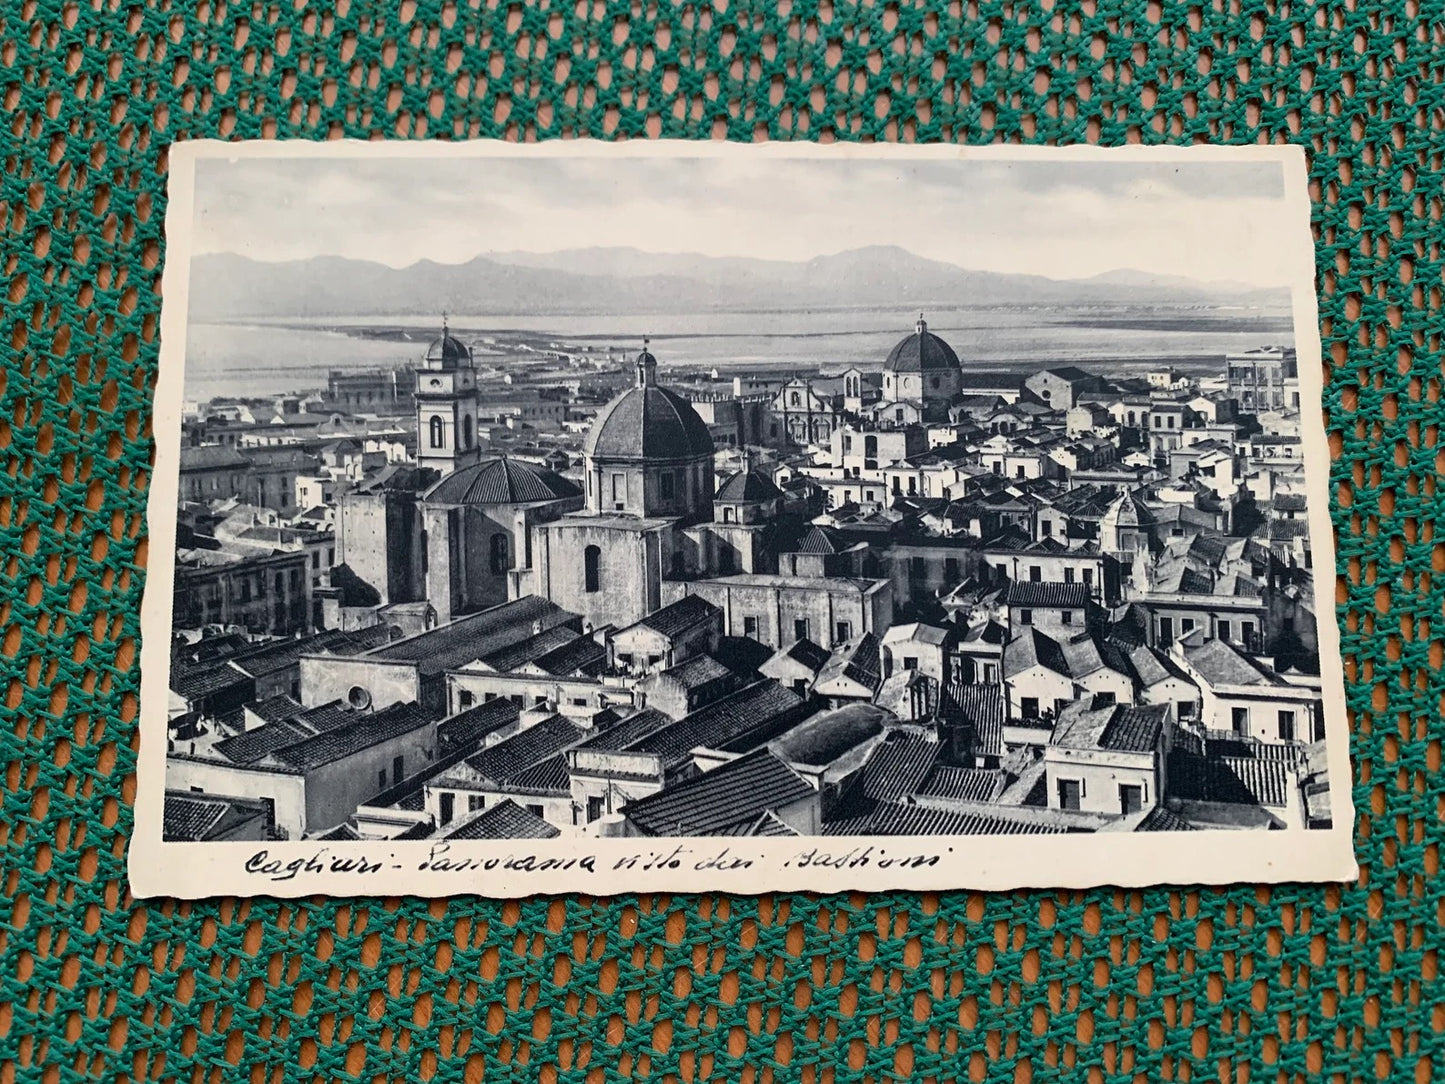 Old postcard - Cagliari panorama visto dai bastioni - Cagliari panorama seen from the bastions - Italy - early 1900's - unused